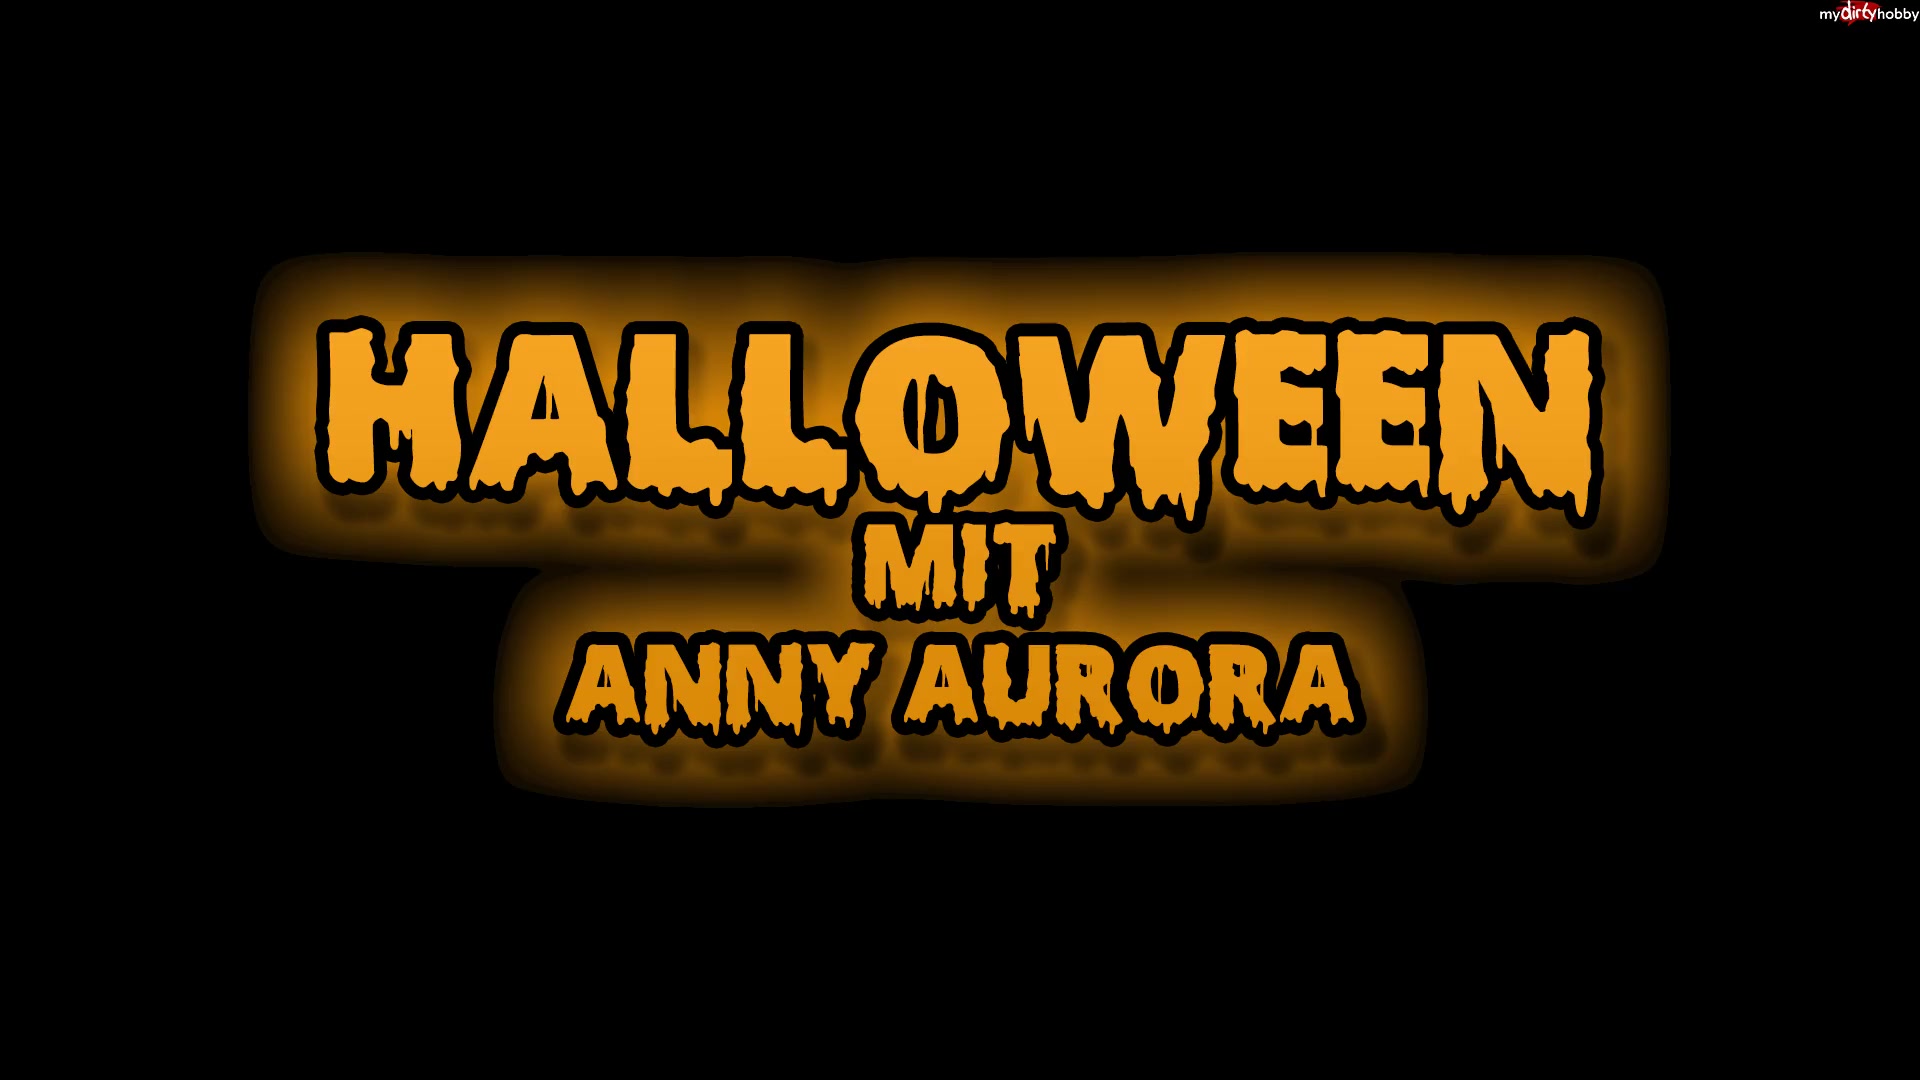 Anny Aurora fickt den Tod zu Halloween